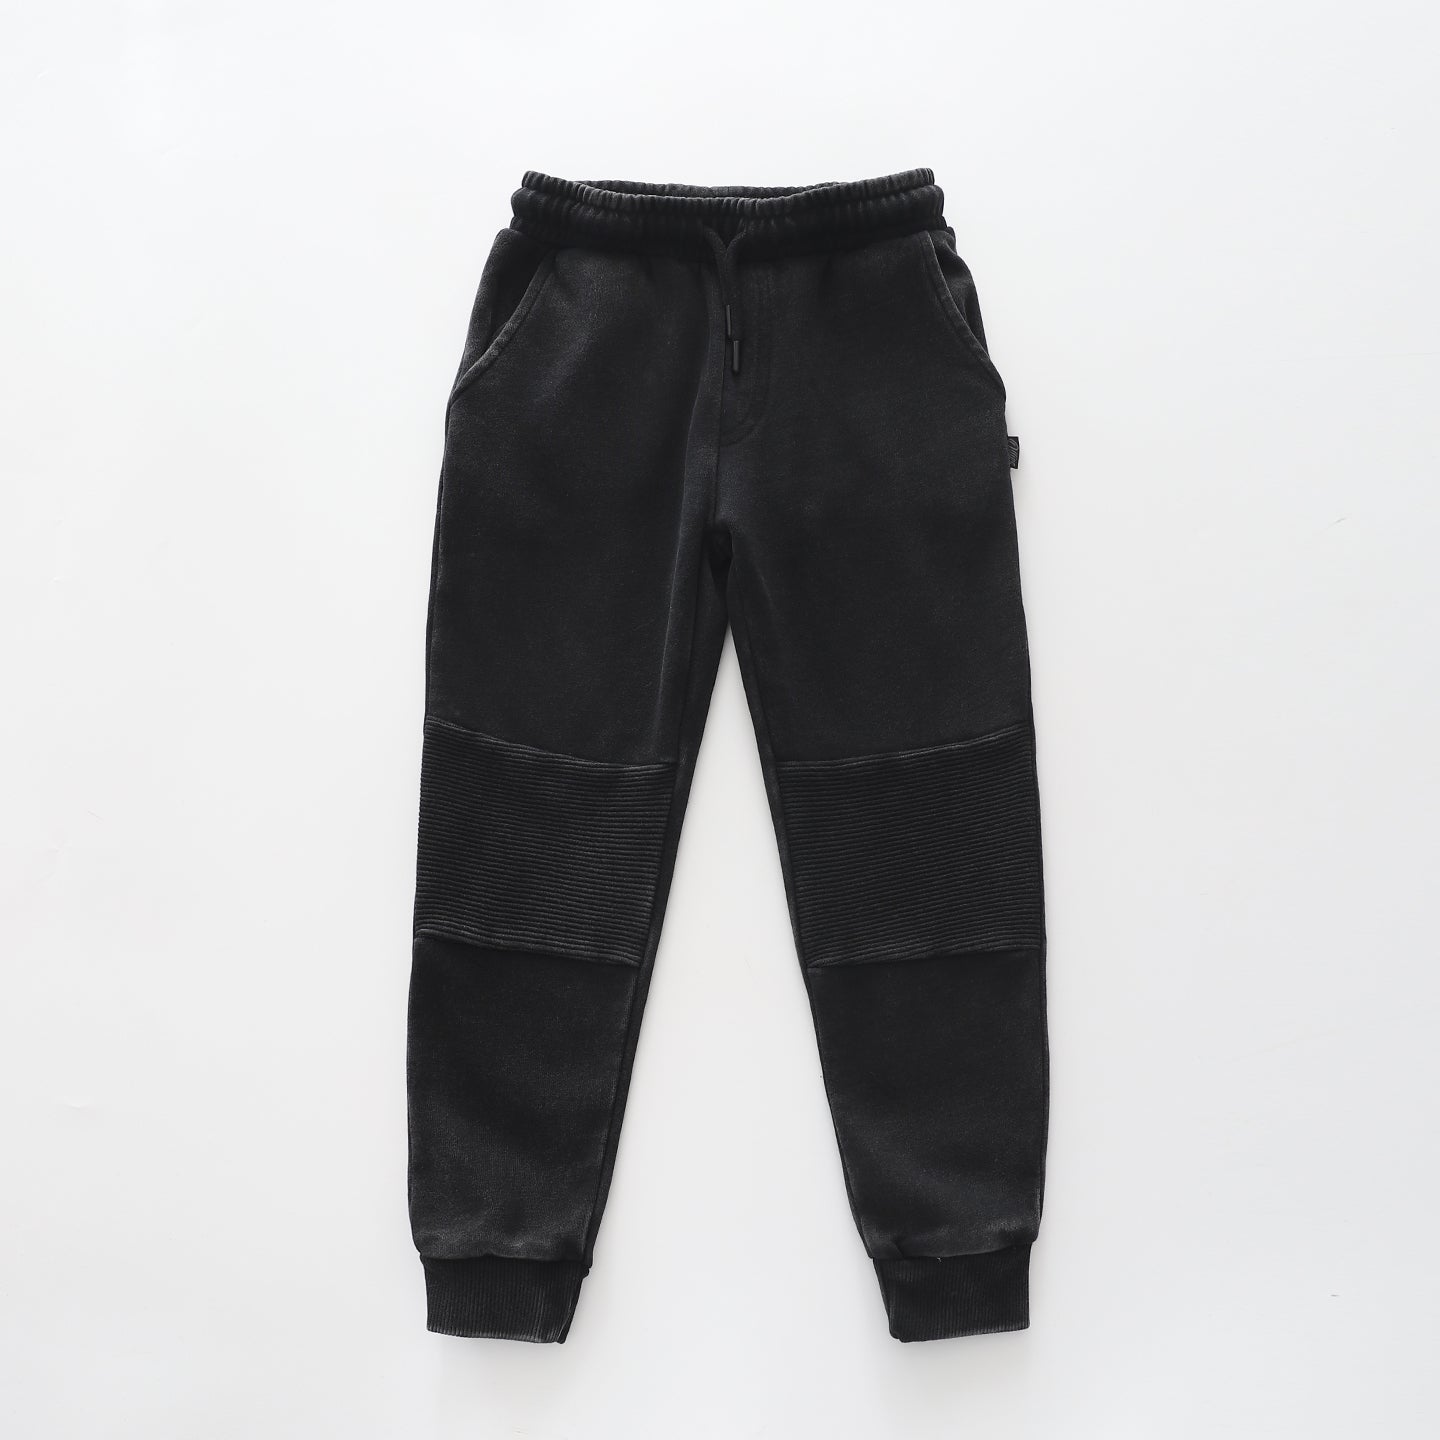 Youth Black Velour Pants, Sweatpants